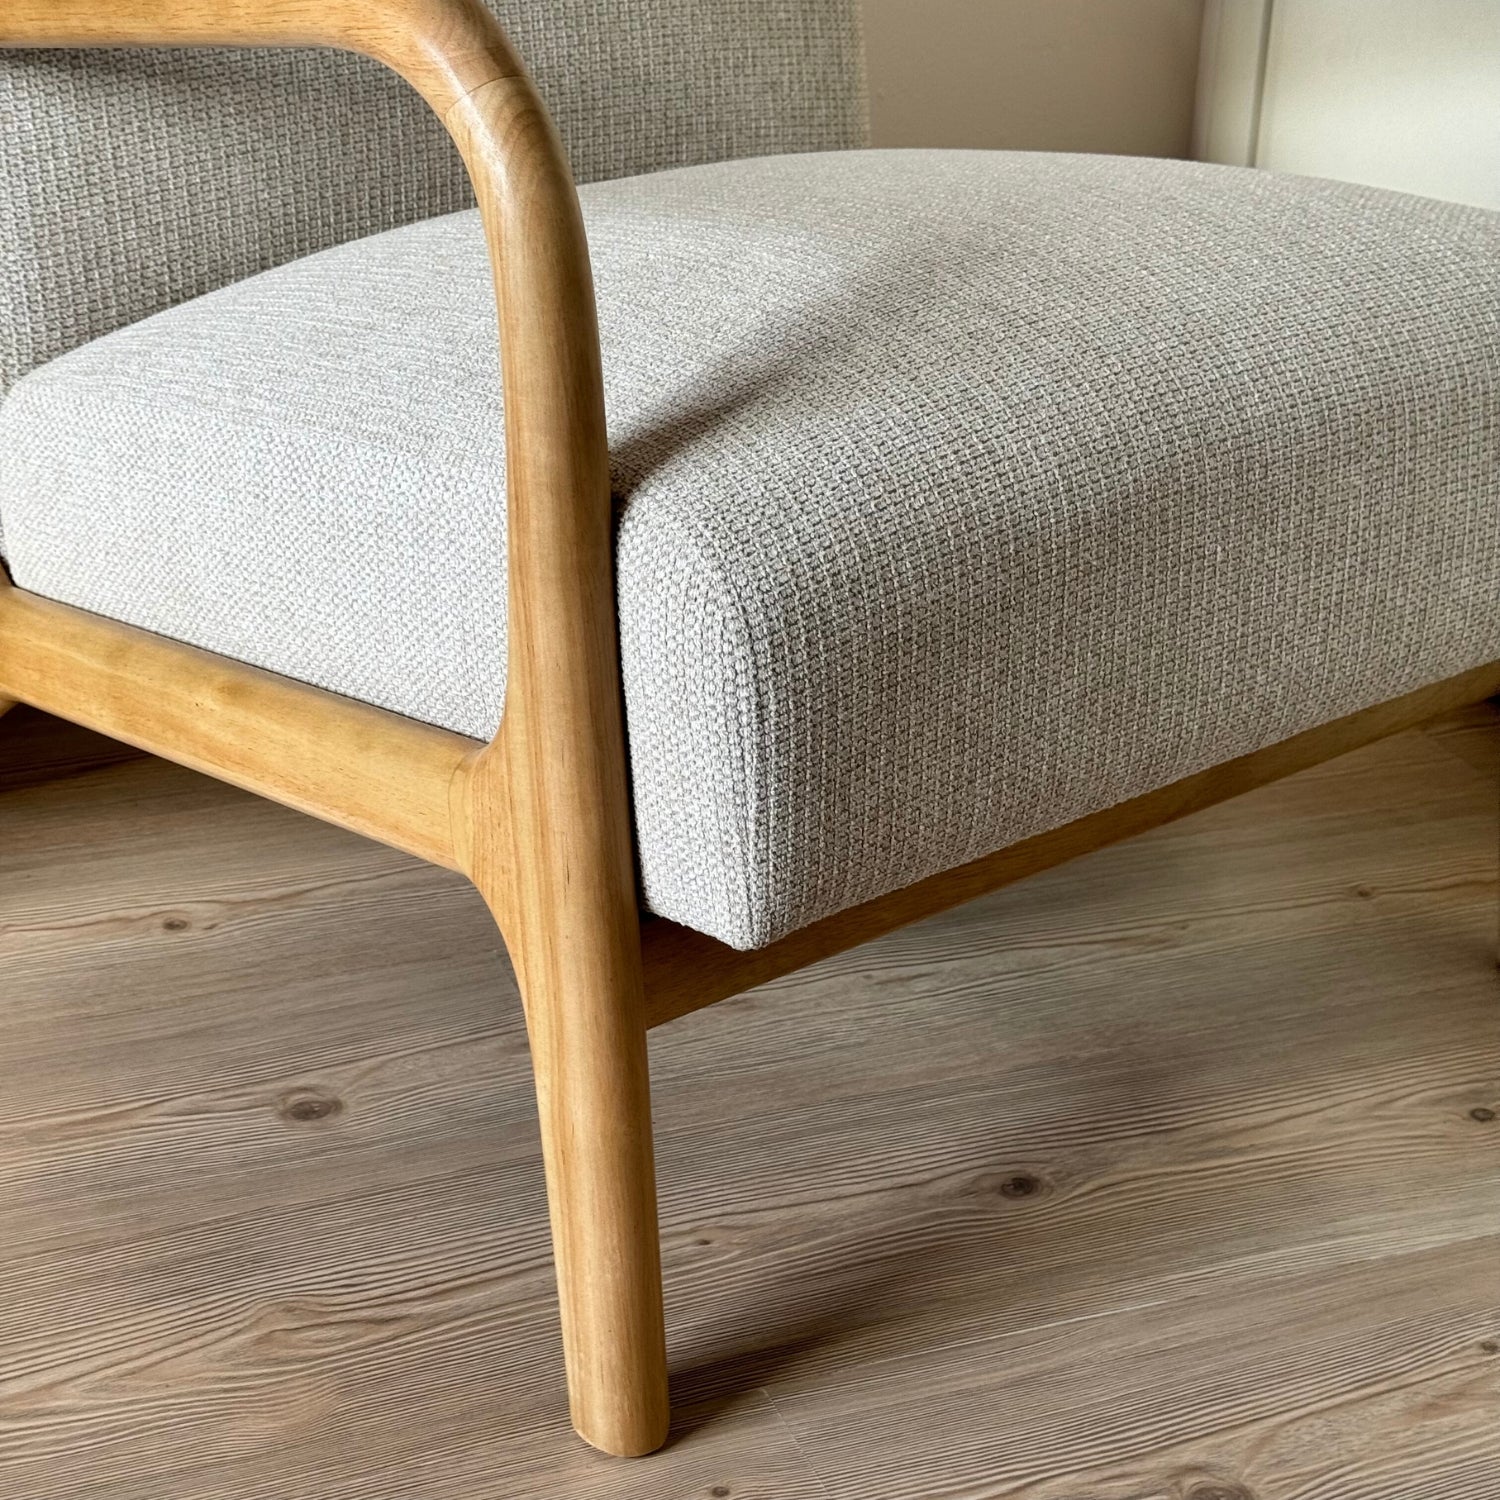 Hertford armchair solid wood frame and armrests.